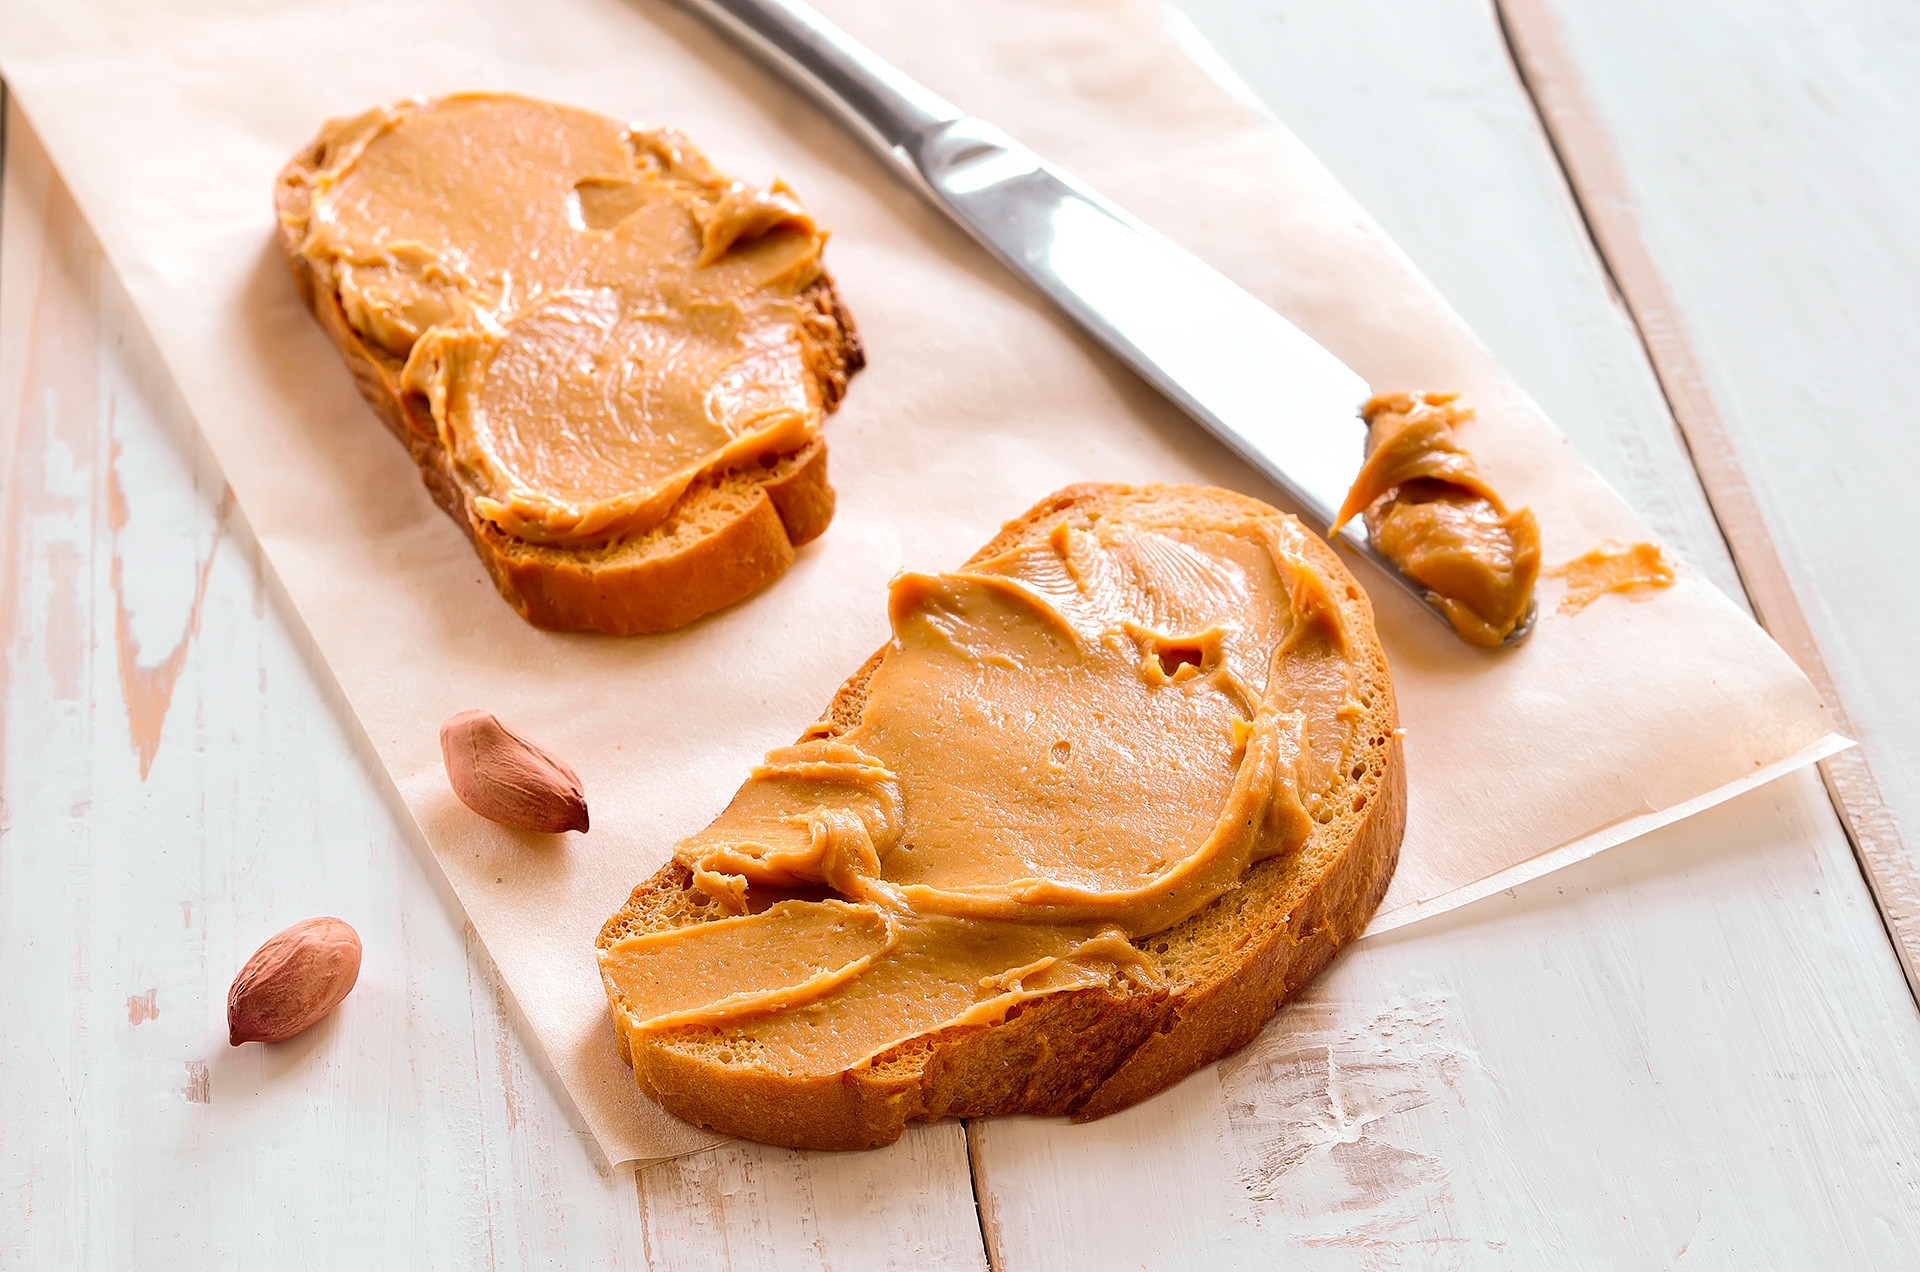 Peanut butter sandwiches.